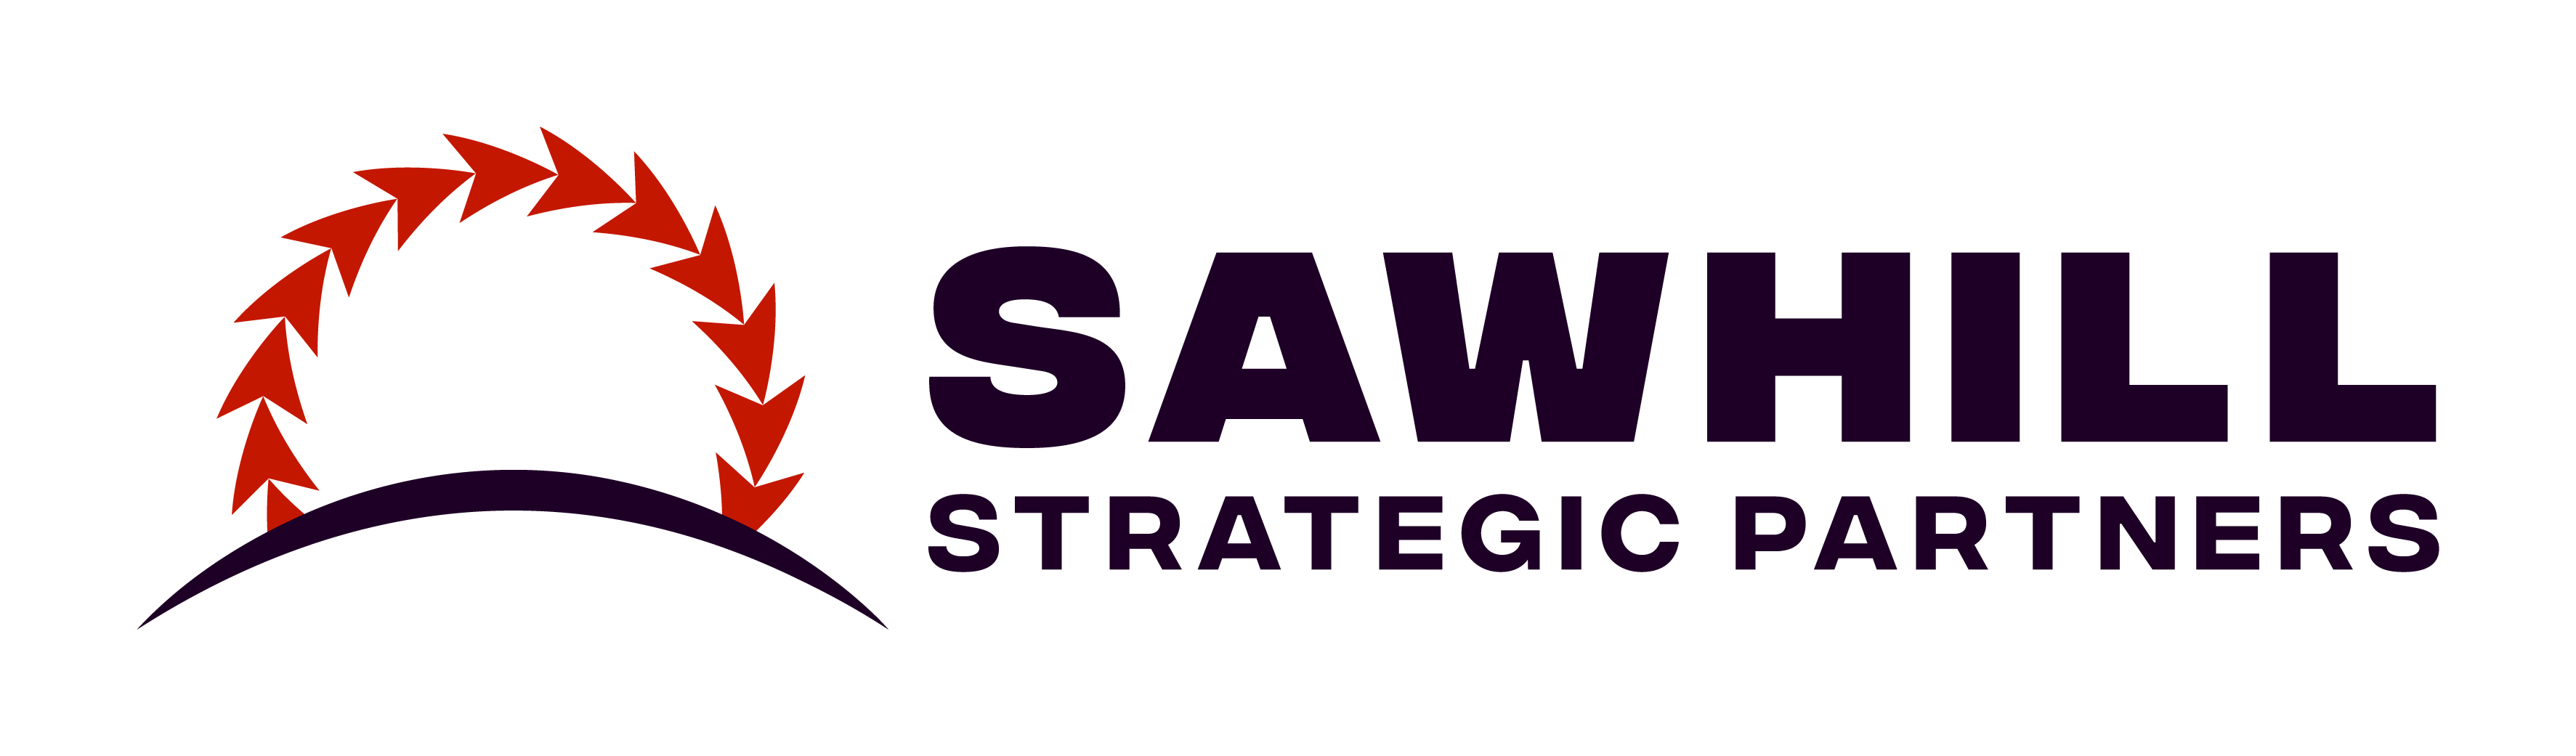 Sawhill Strategic Partners